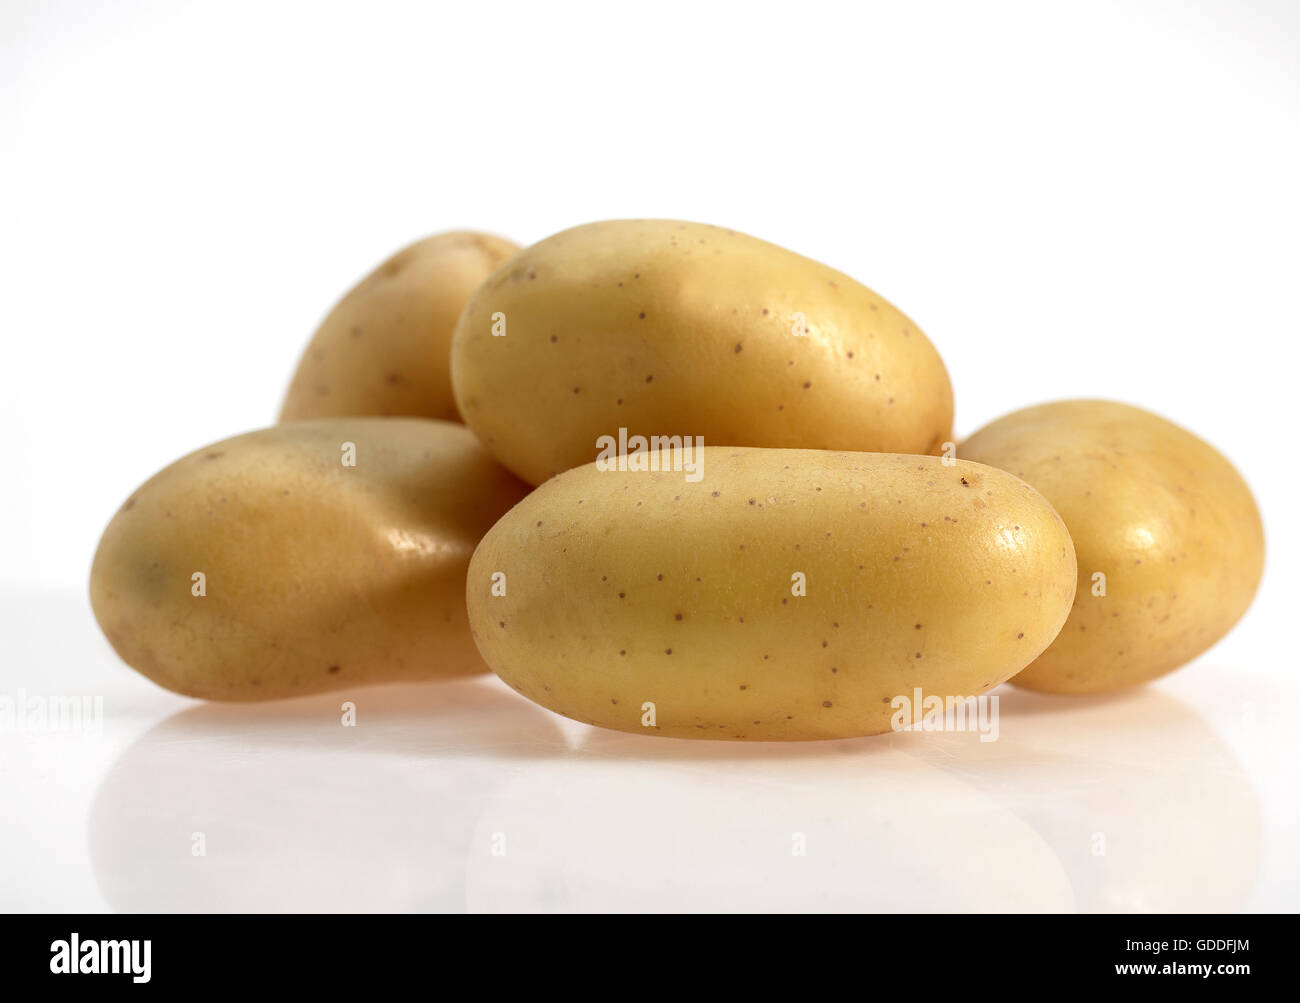 Mona Lisa Potato, solanum tuberosum, Vegetable against White Background Stock Photo